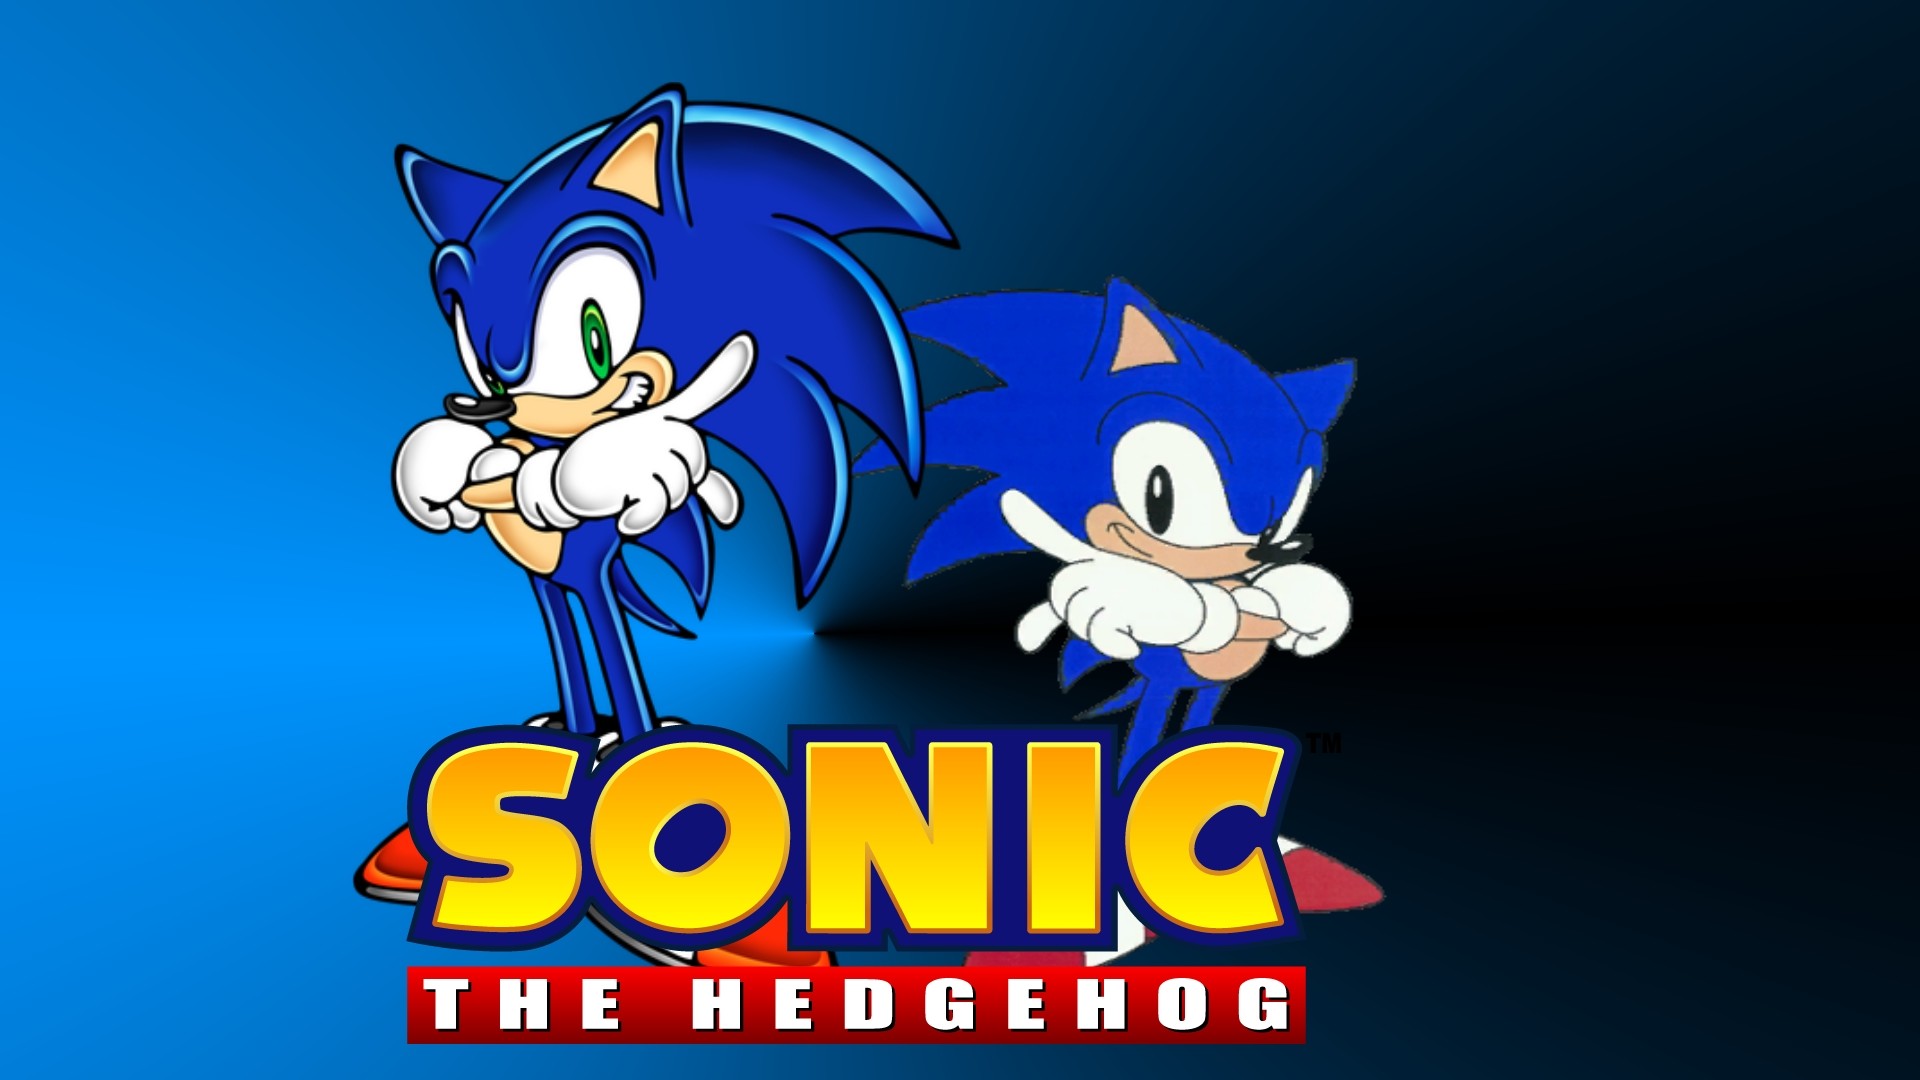 1920x1080 ... Sonic the Hedgehog - Fanart - Background ...